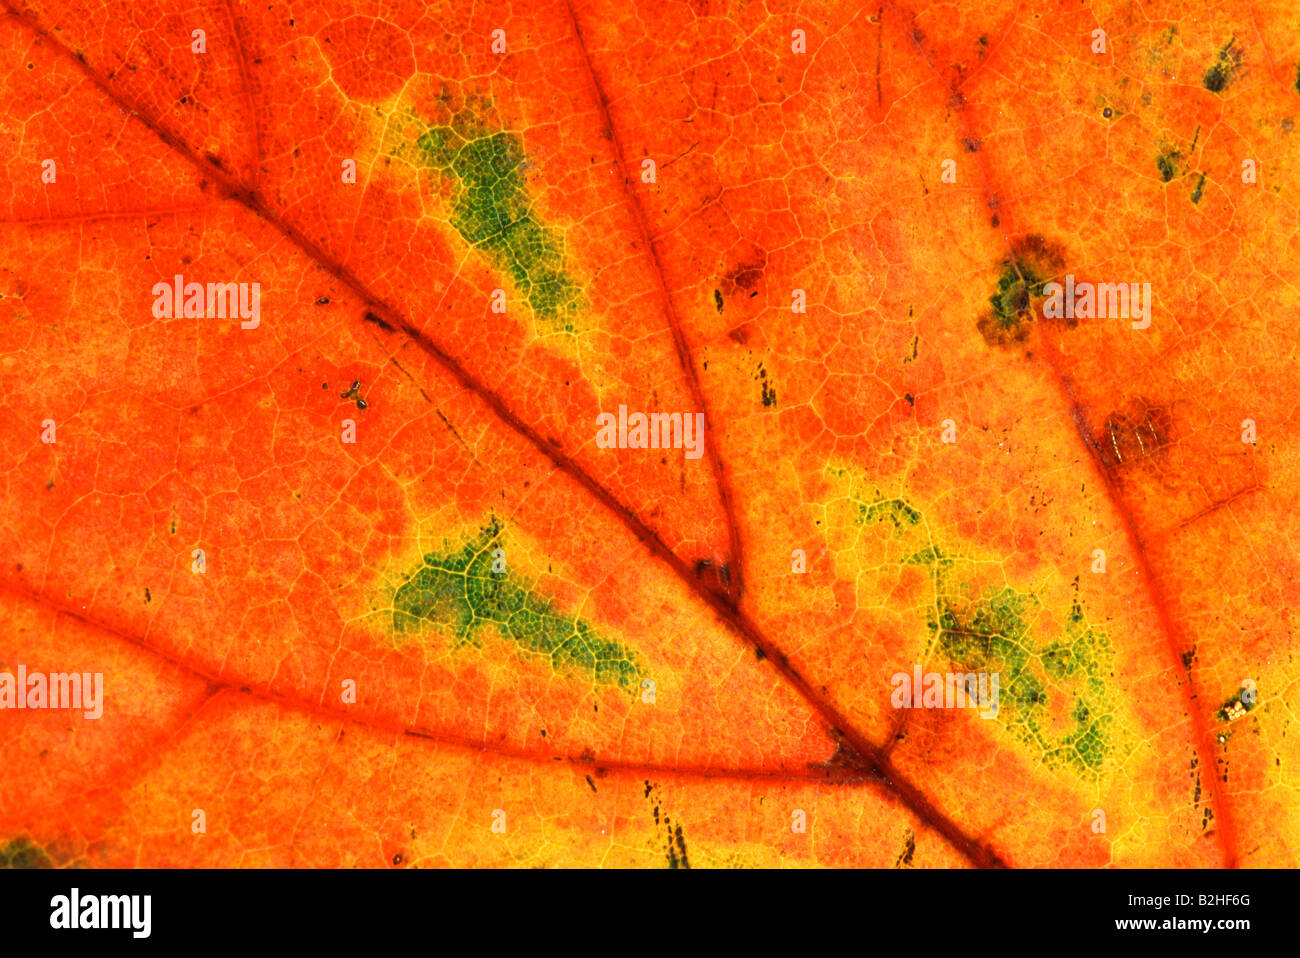 leaf veins maple tree leave acer afterimage backcloth background image backdrop close up pattern patterns Stock Photo